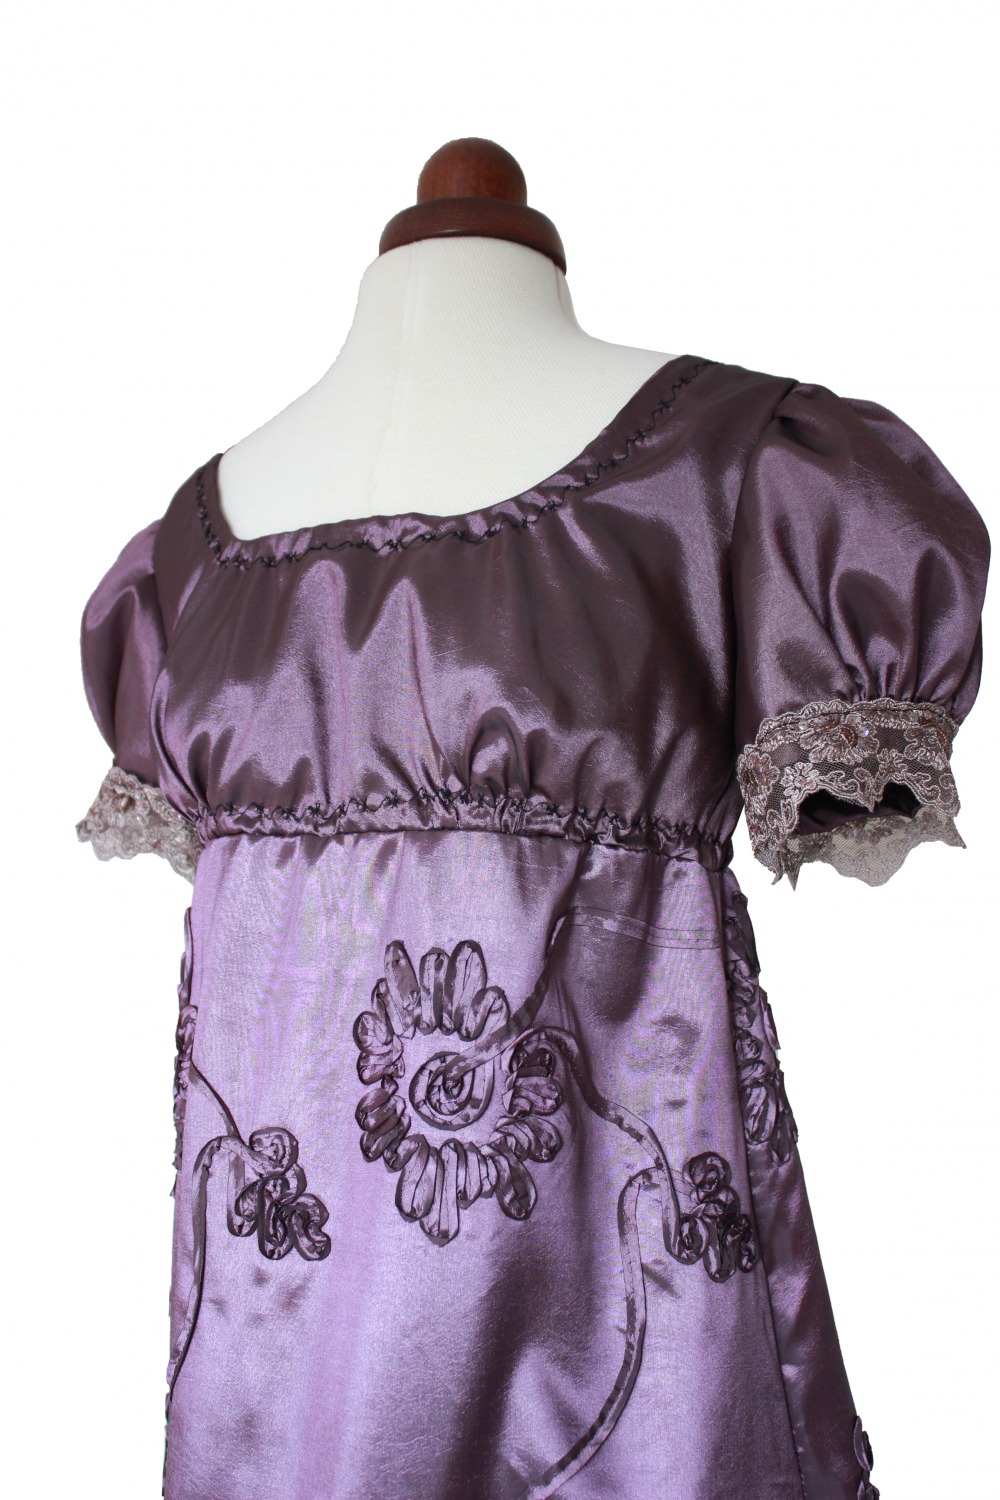 Ladies 18th 19th Regency Jane Austen Costume Evening Ball Gown Petite Size 10 - 12 Image